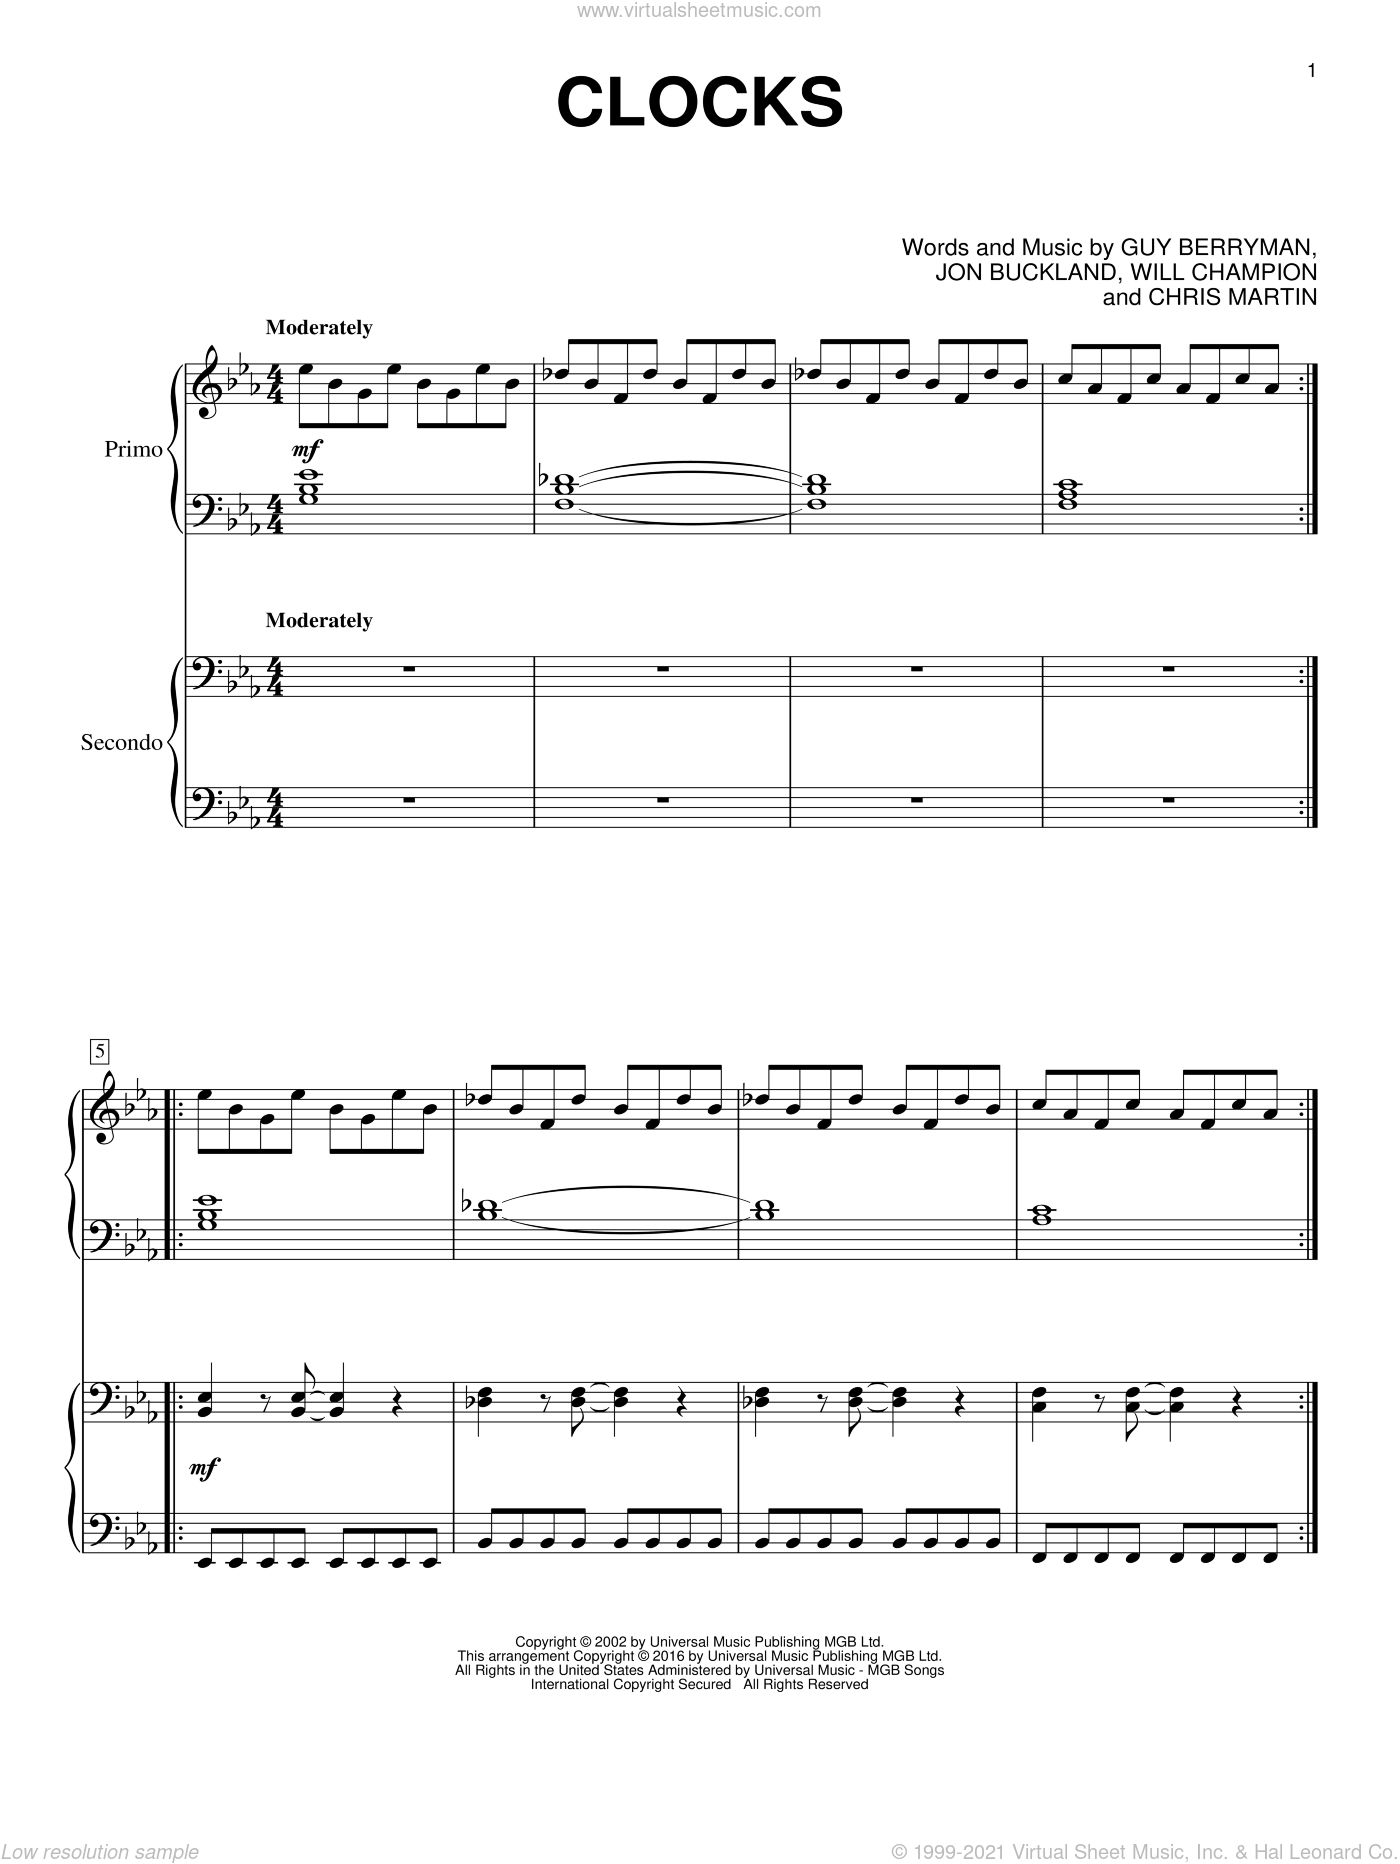 Berryman - Clocks sheet music for piano four hands [PDF]